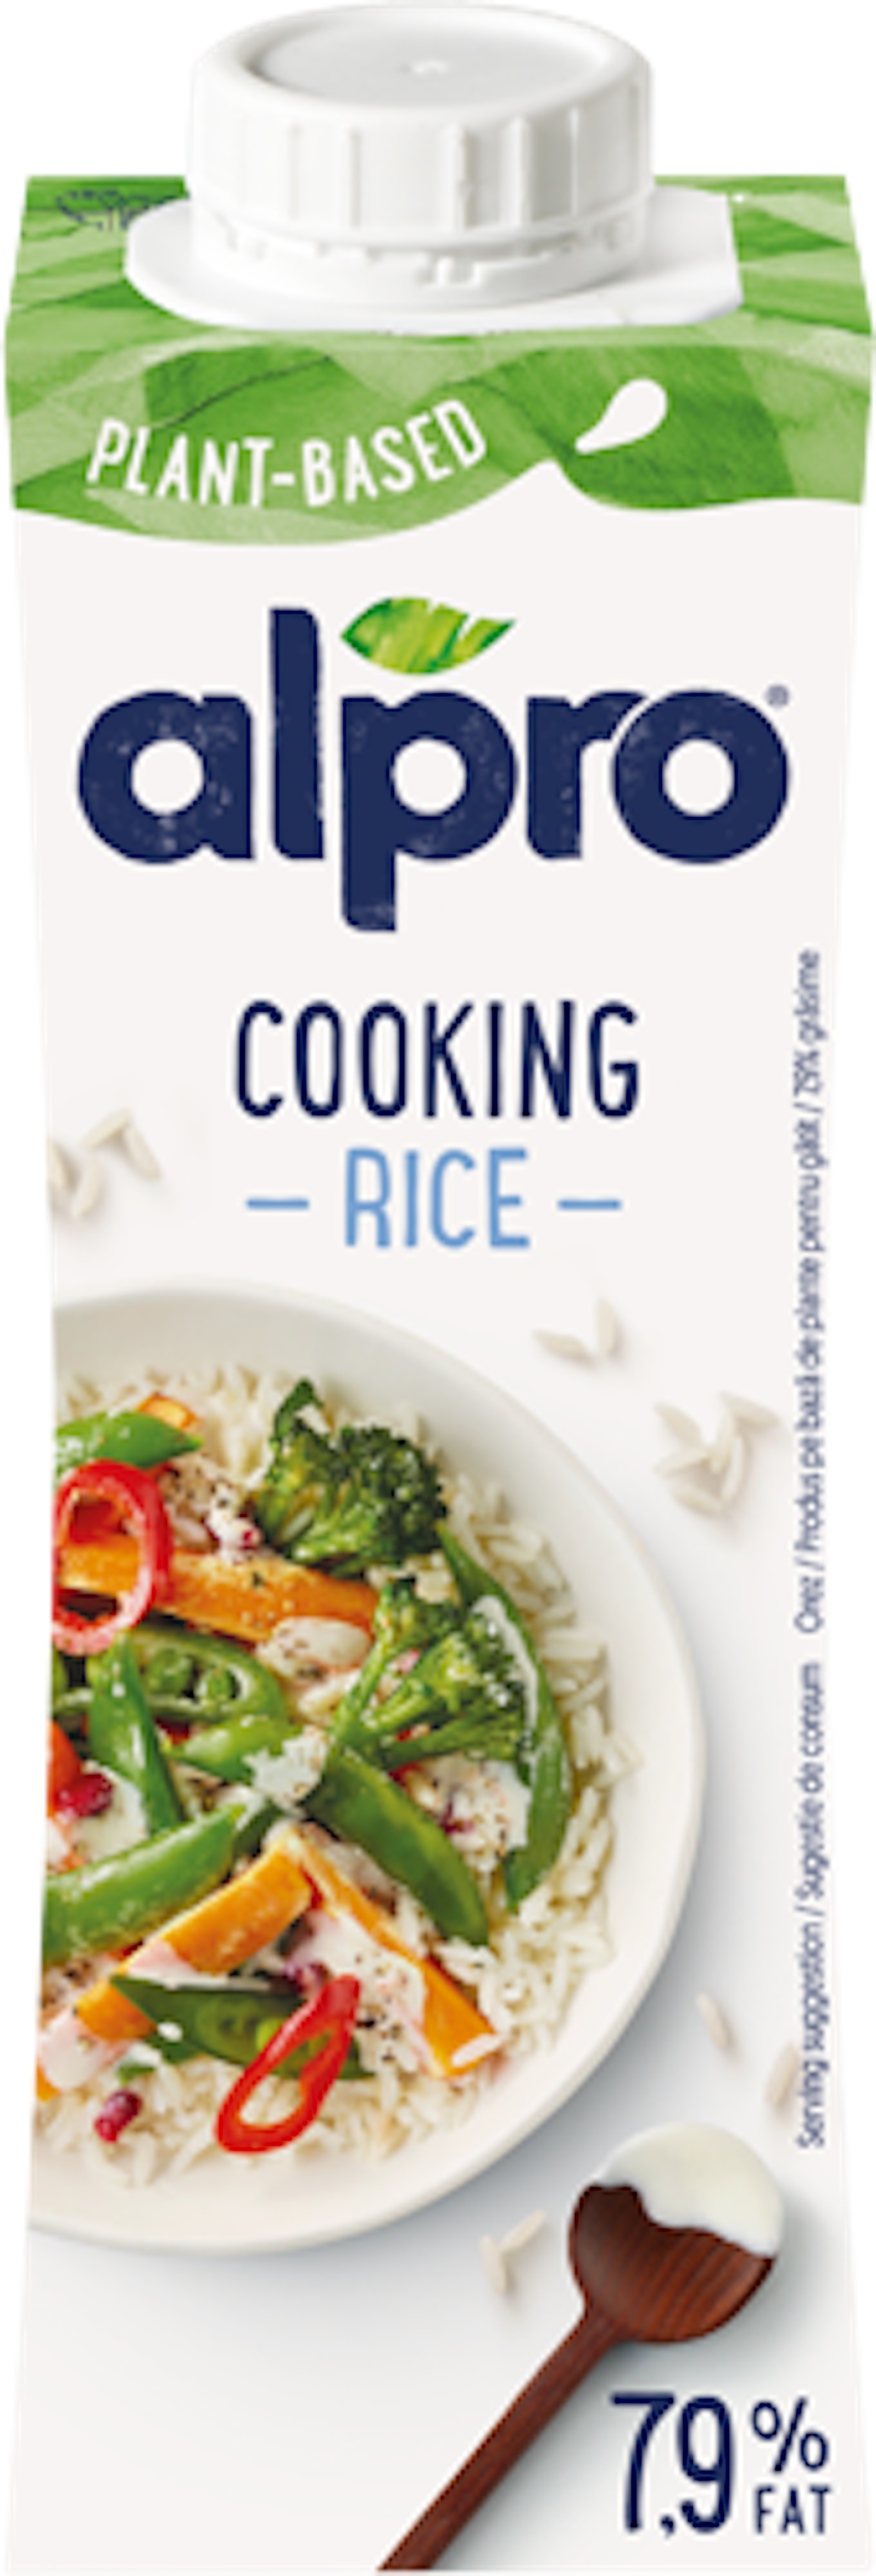 Cuisine al riso